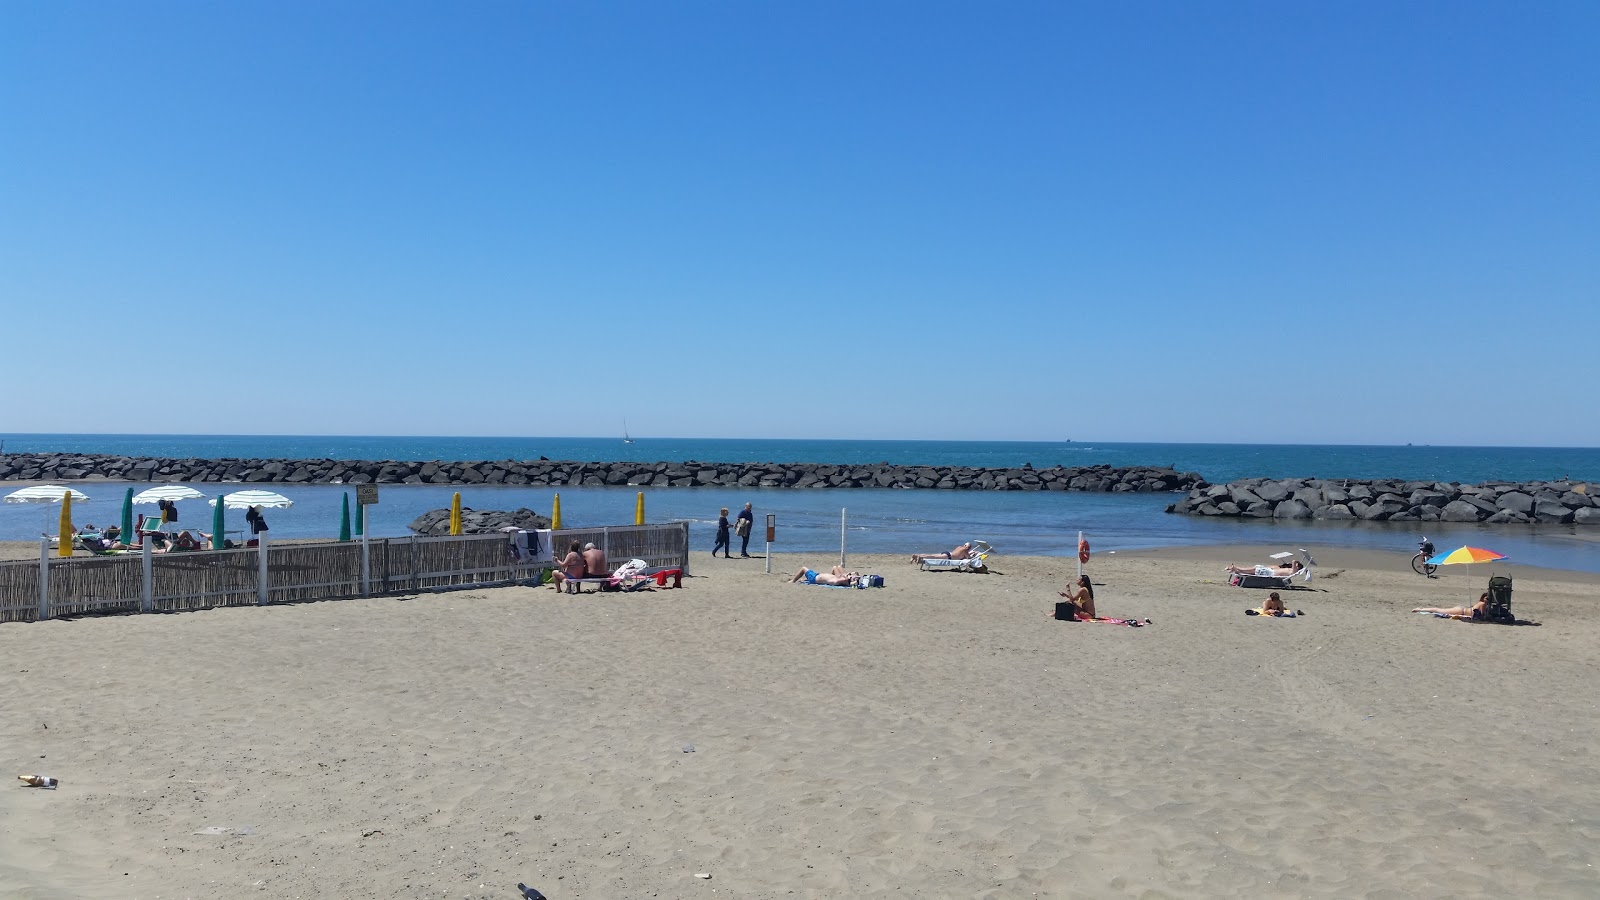 Valokuva Spiaggia Di Coccia Di Mortoista. pinnalla ruskea hiekka:n kanssa